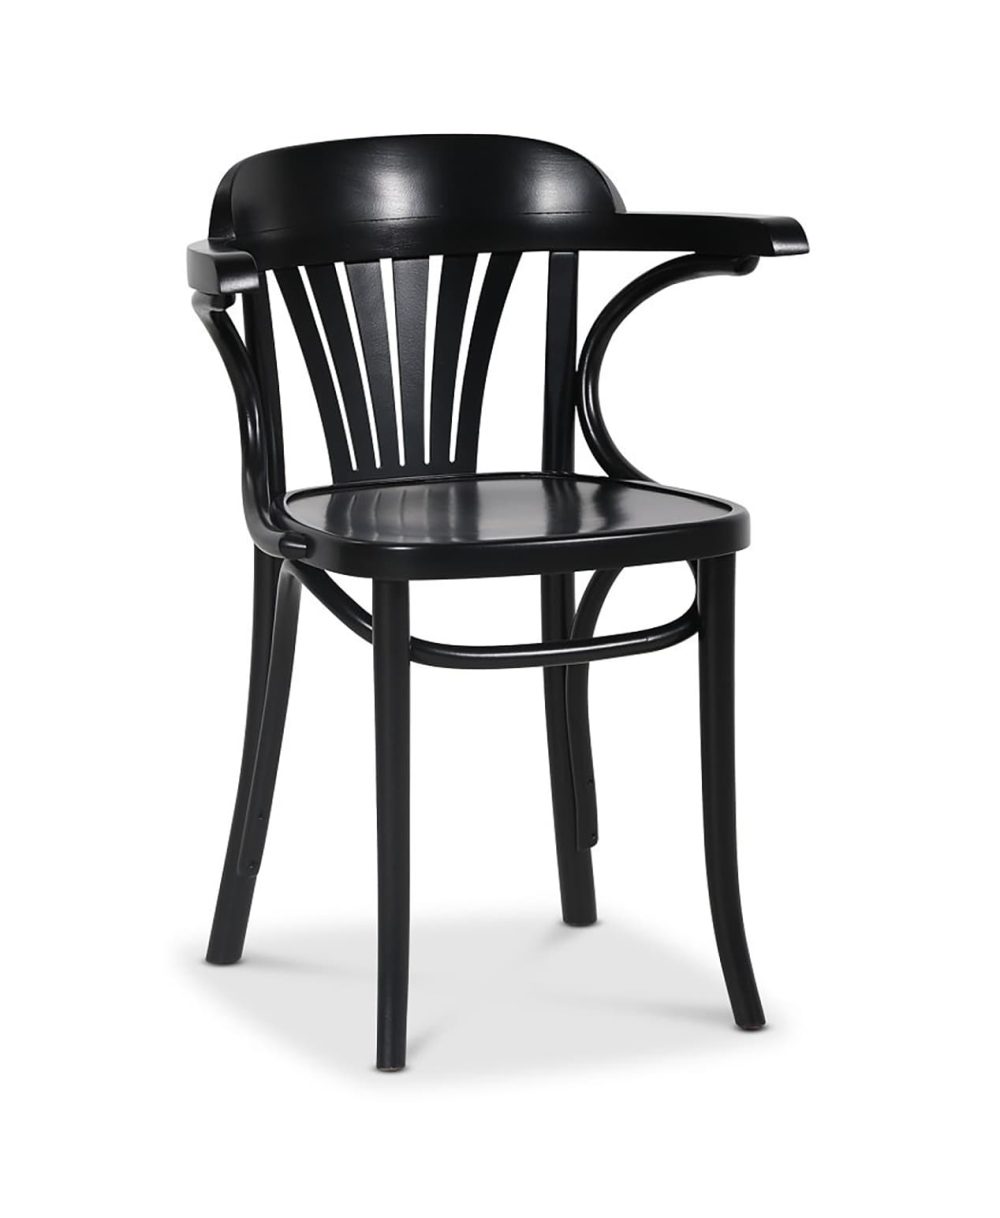 curved-no24-chair-black-profile.jpg